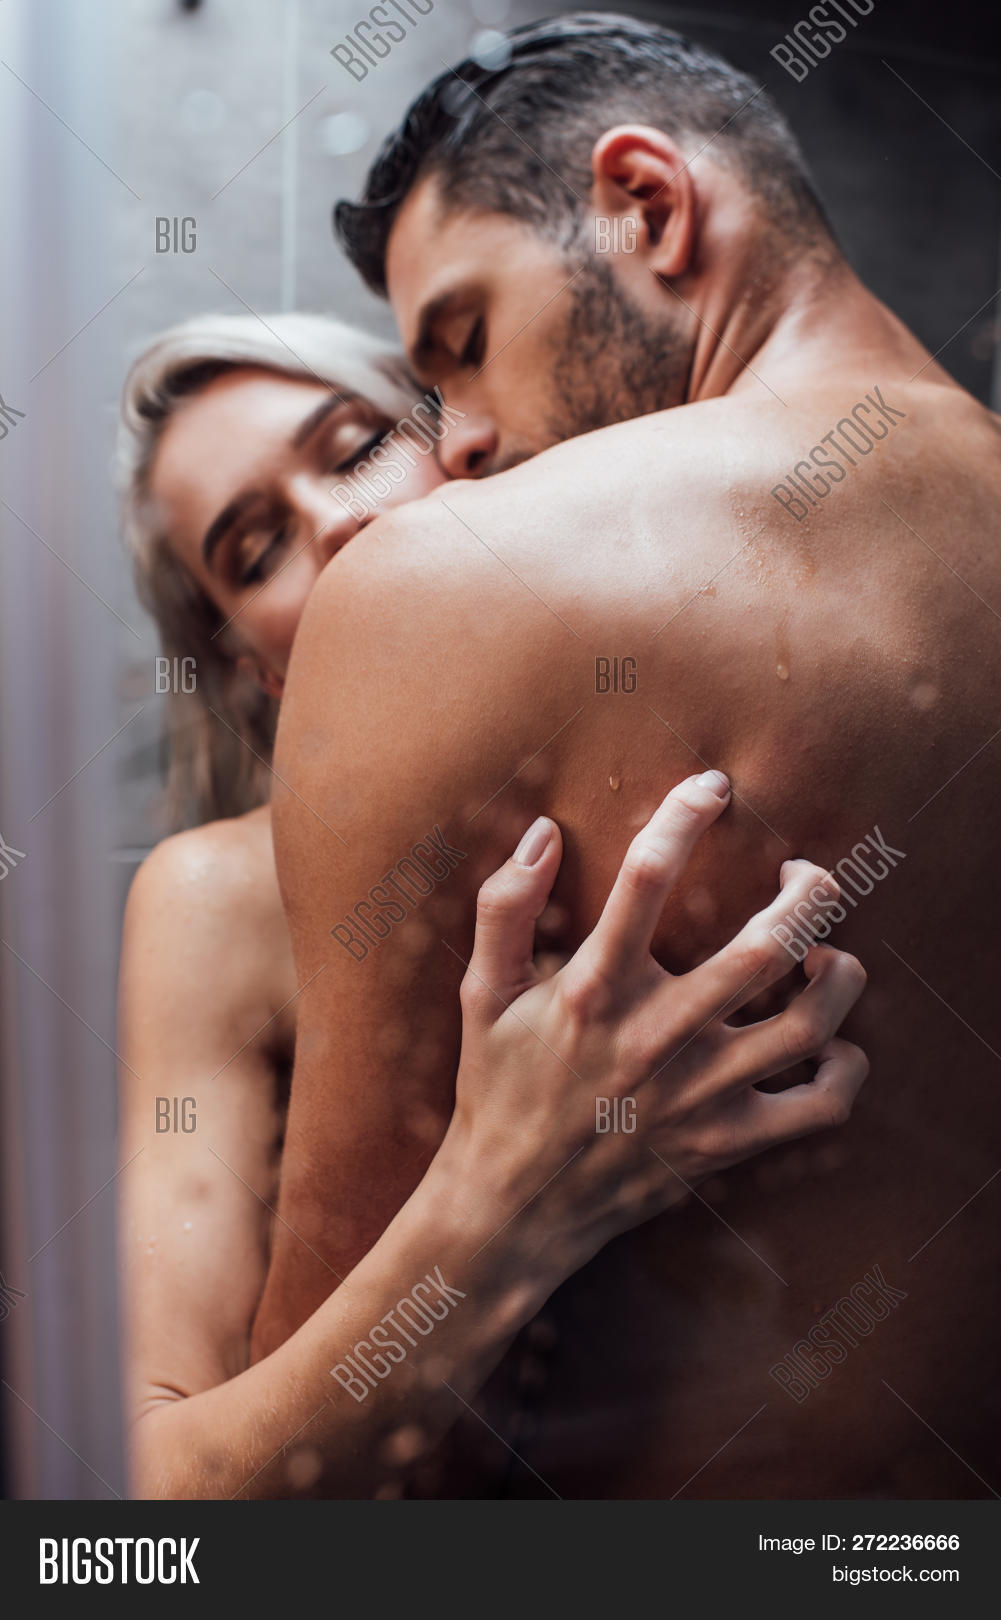 barillas add photo kissing while naked